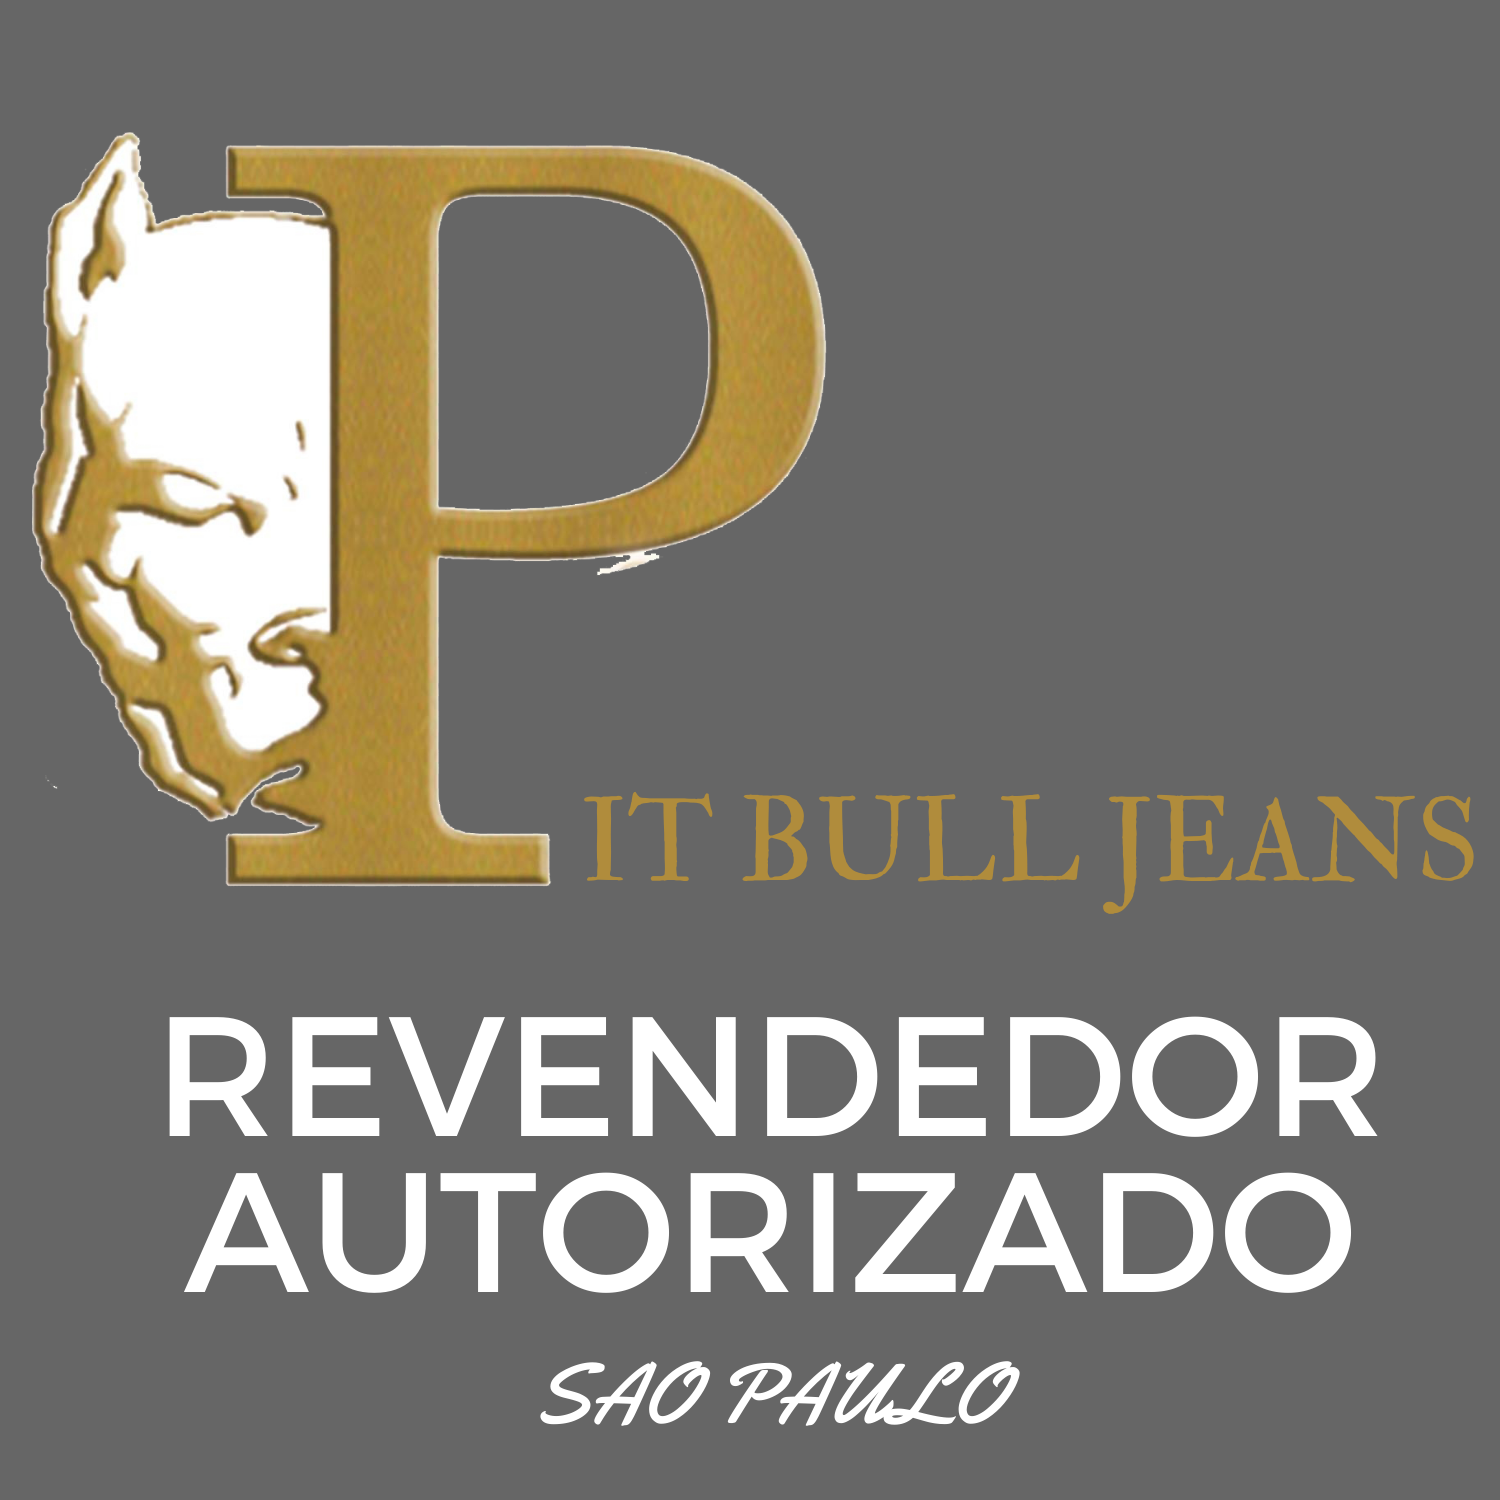 REVENDEDOR AUTORIZADO PIT BULL JEANS